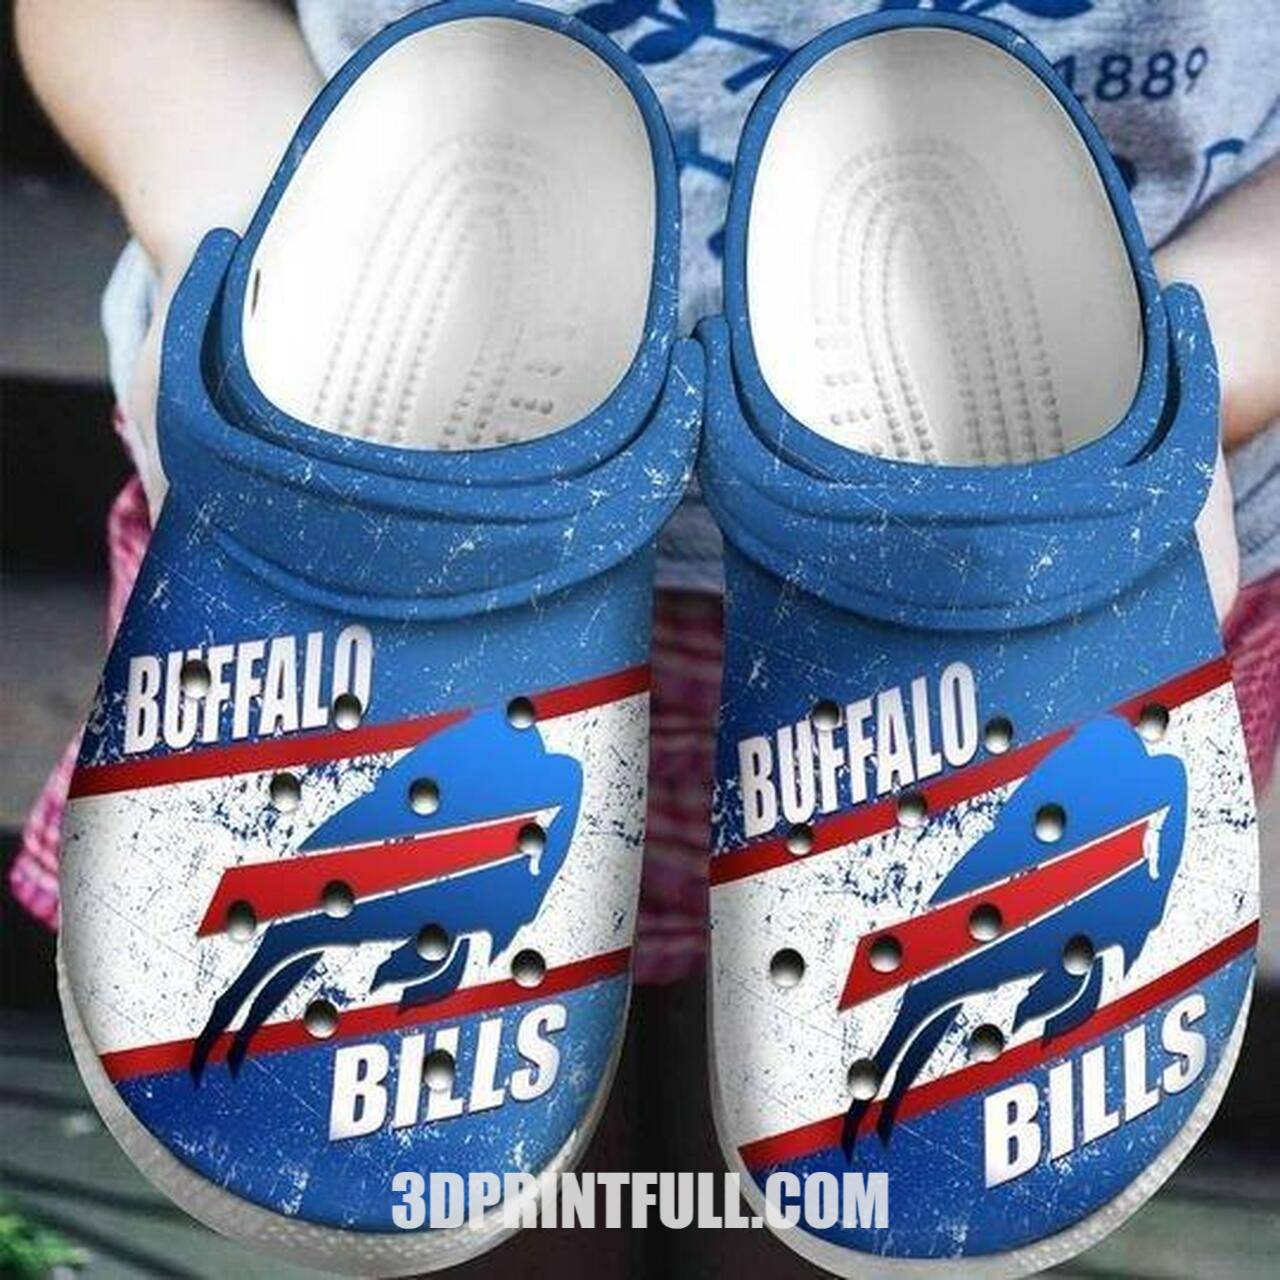 Buffalo-Bills-Nfl-Football-Personalized-Crocs-Crocband-Clog-Unisex-Fashion-Style-For-Women-Men